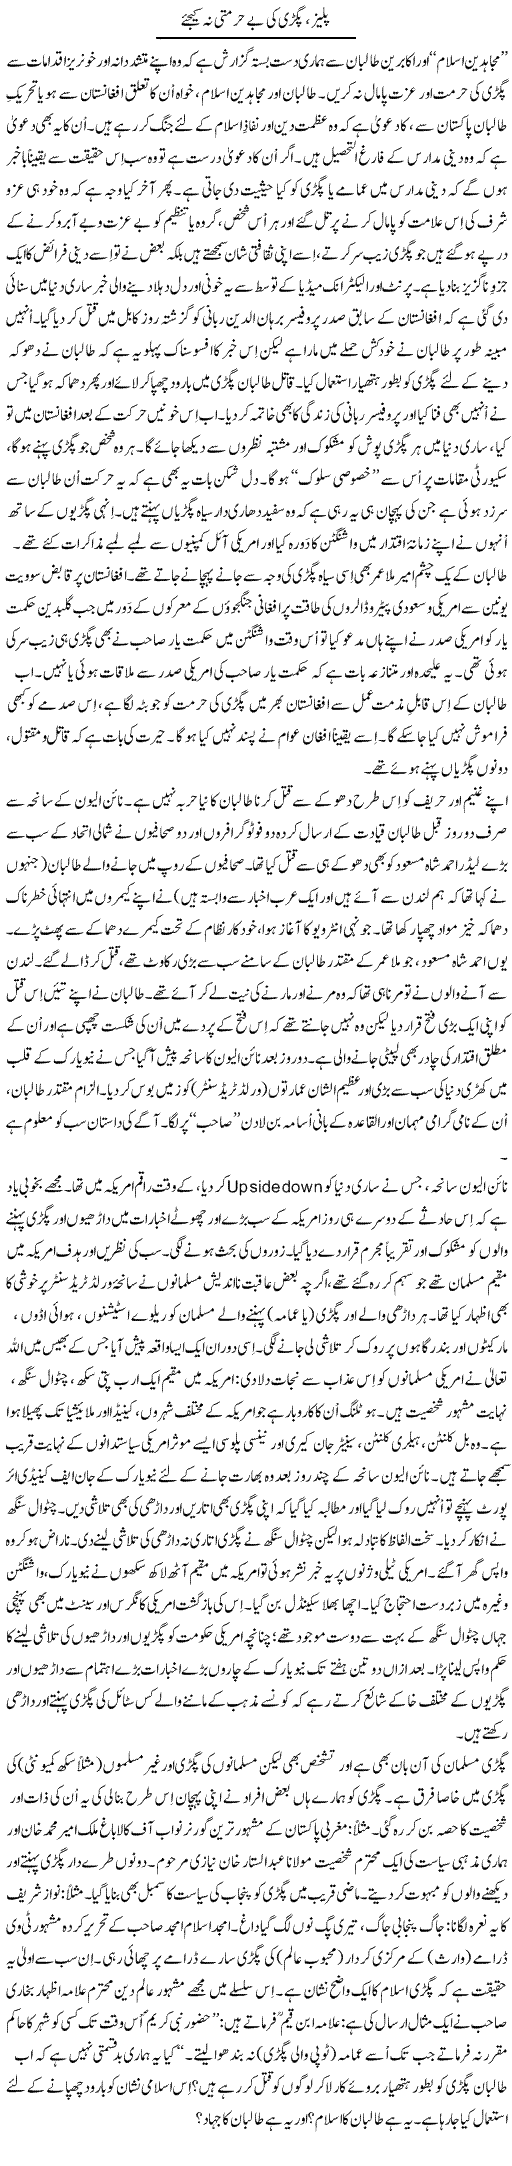 Burhanuddin Rabbani Express Column Tanvir Qasir 23 September 2011